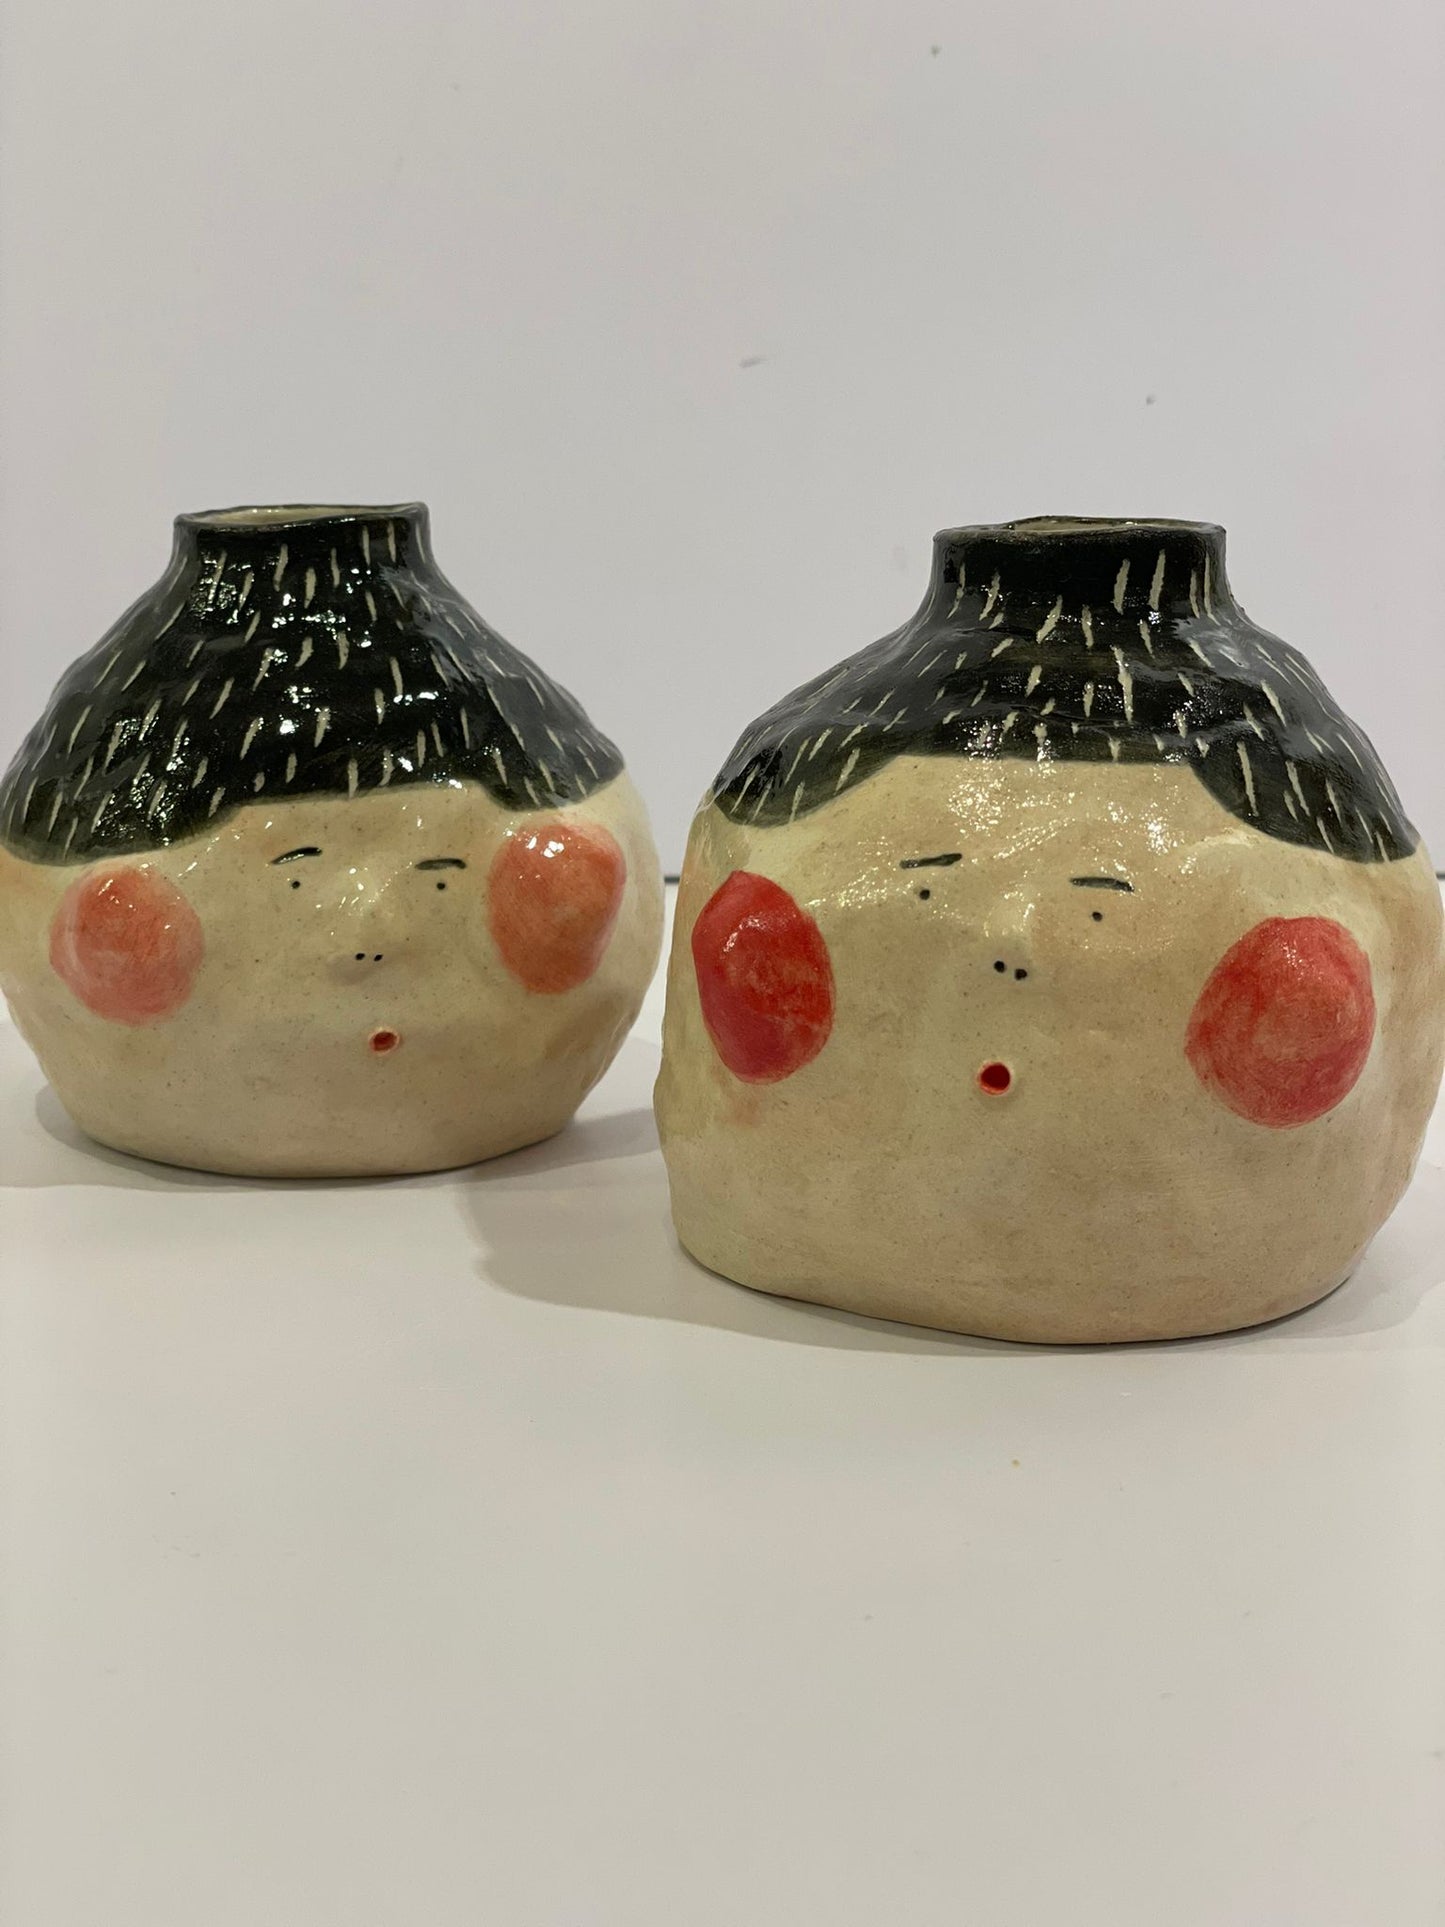 Porcelain single-head flower pot